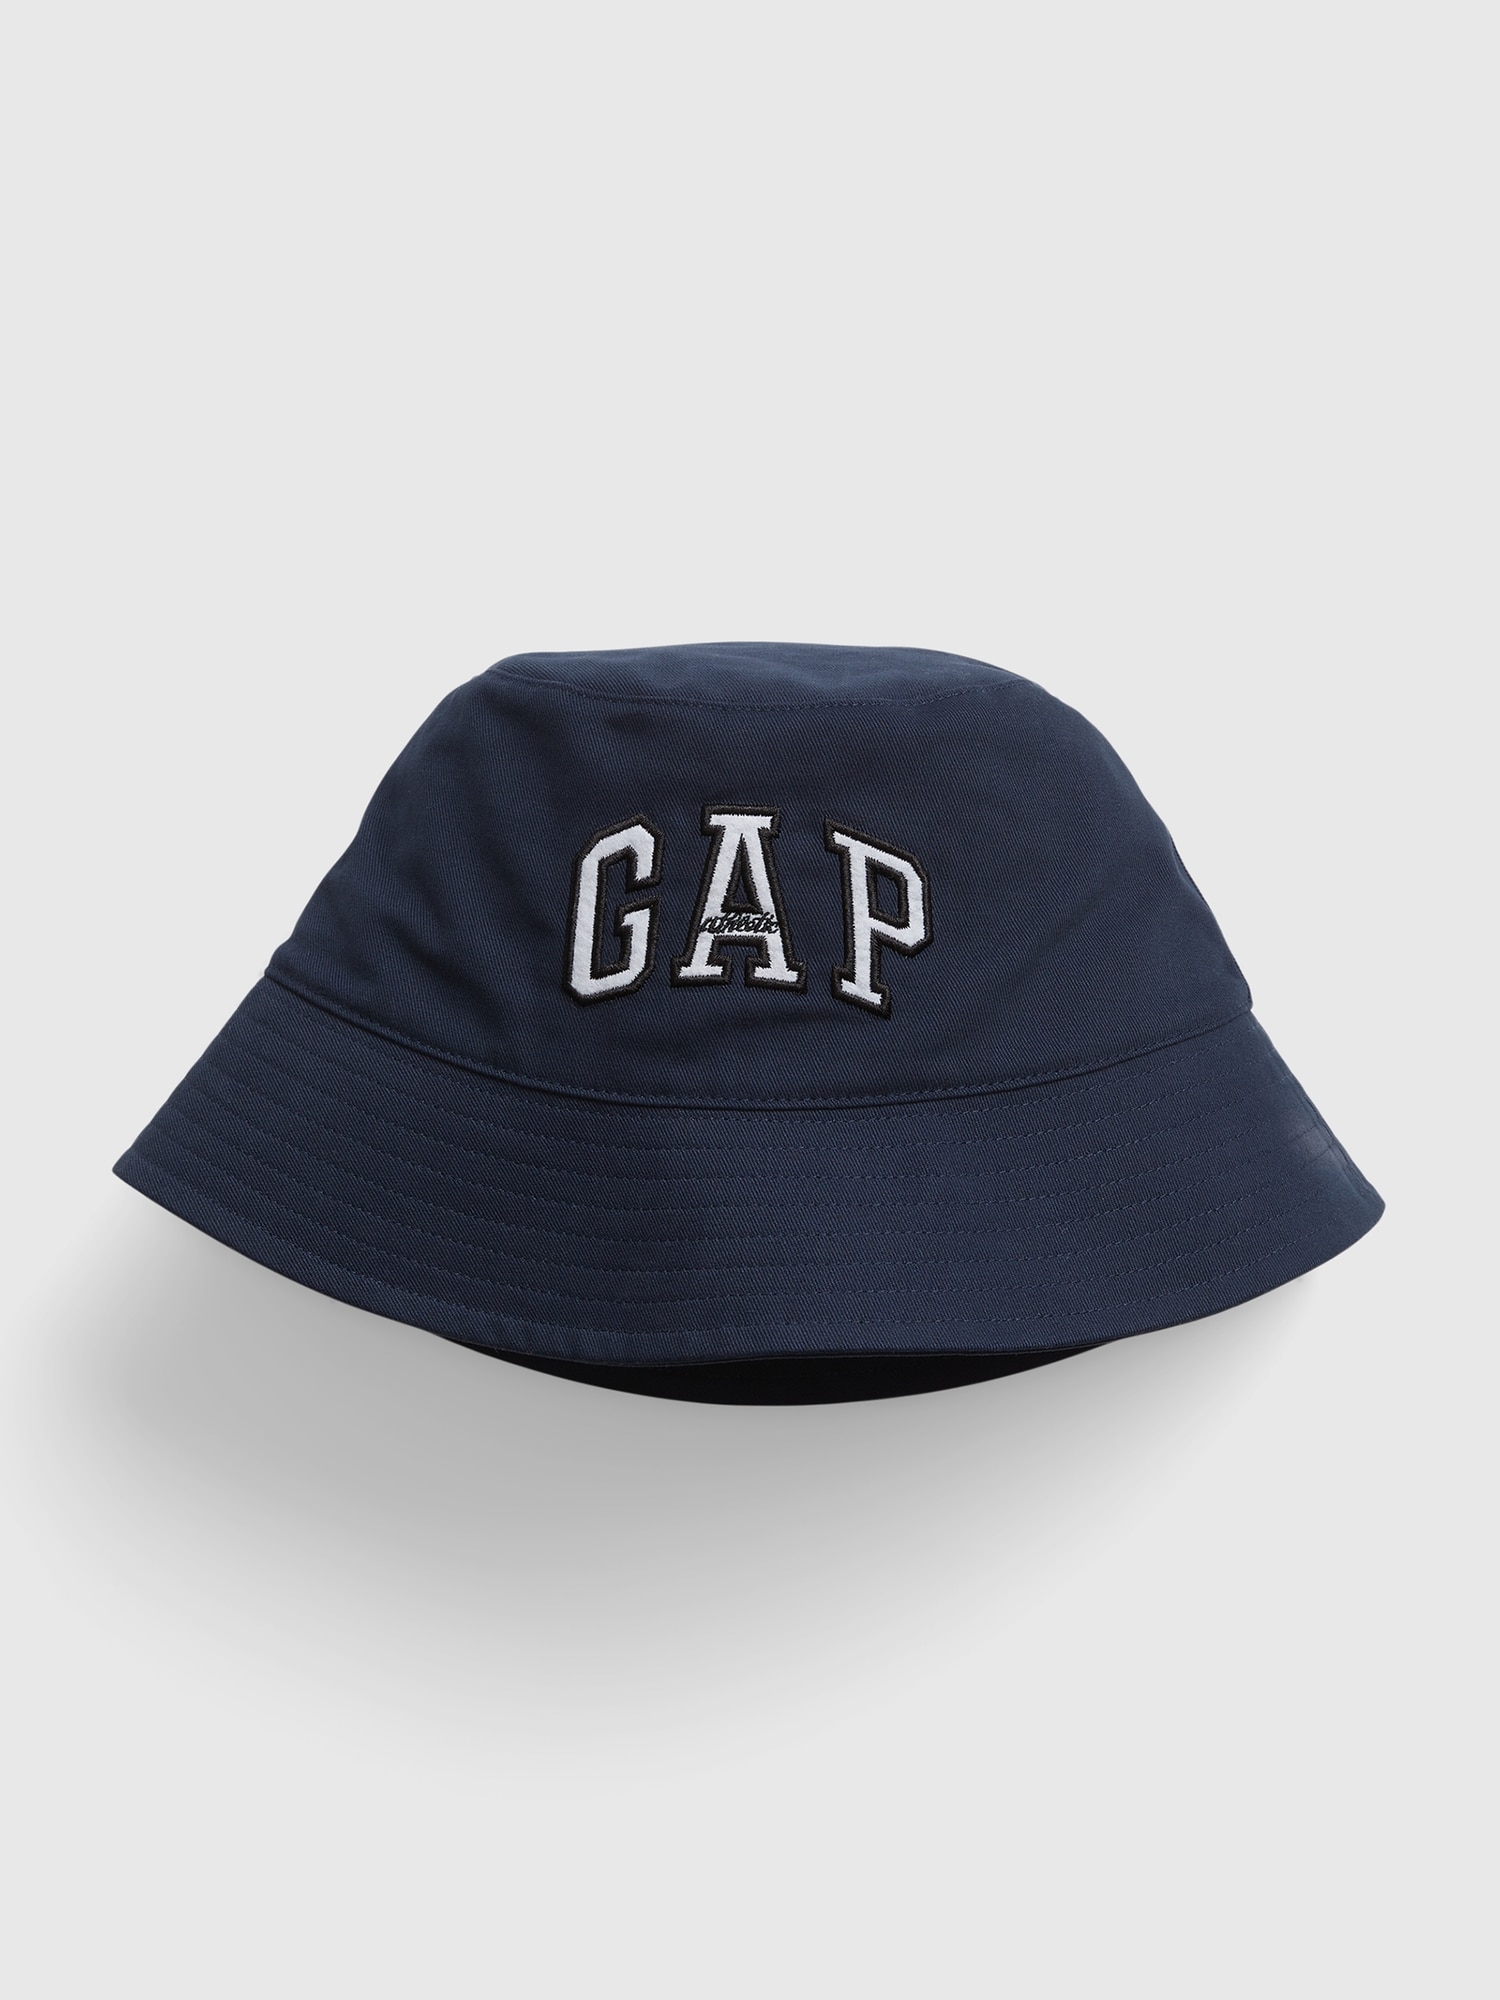 Hat with GAP logo - Ladies